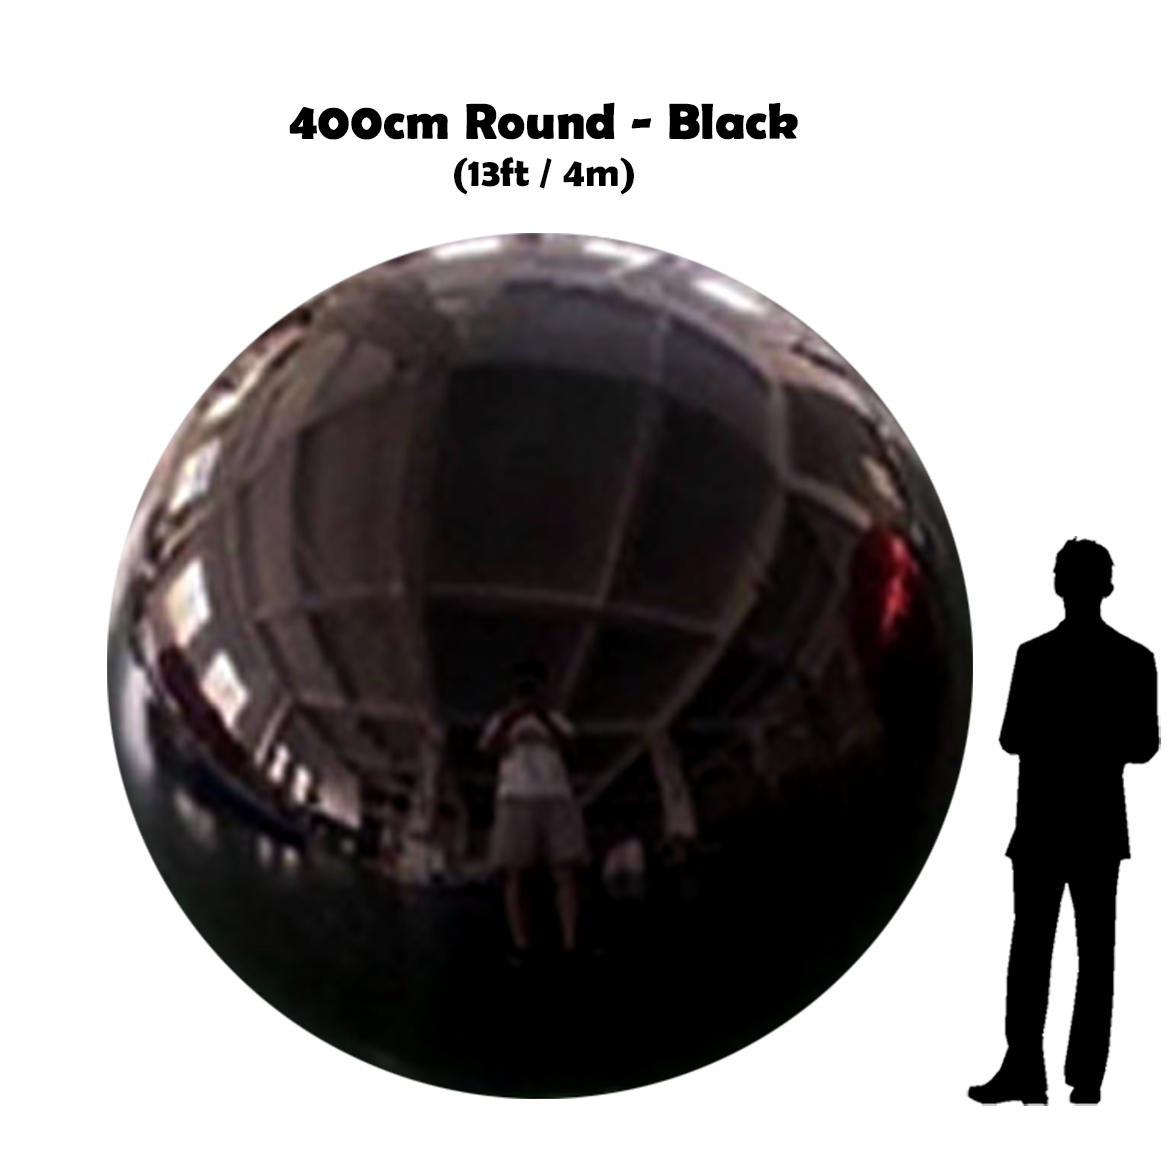 400cm Big Black ball beside 5'10 guy silhouette 